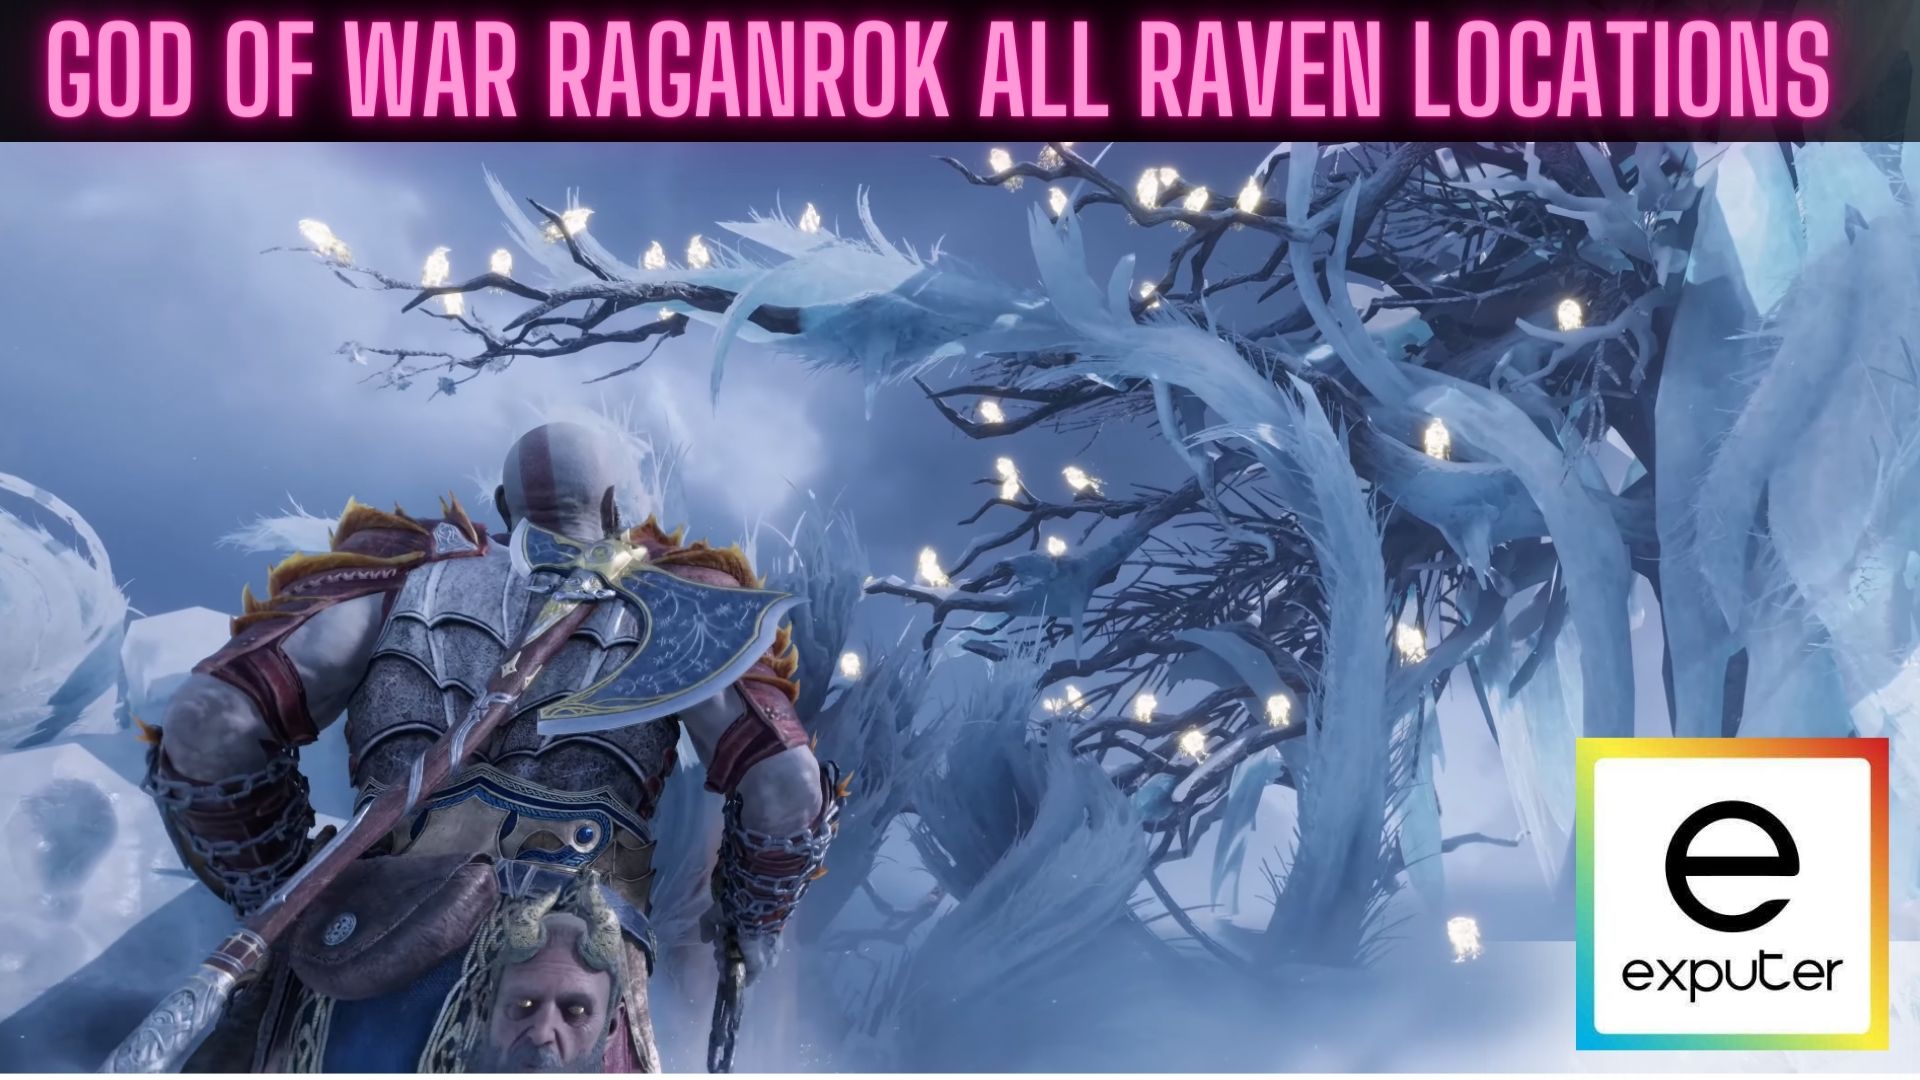 God of War Ragnarok' Odin's Ravens locations: How to find all 48 birds